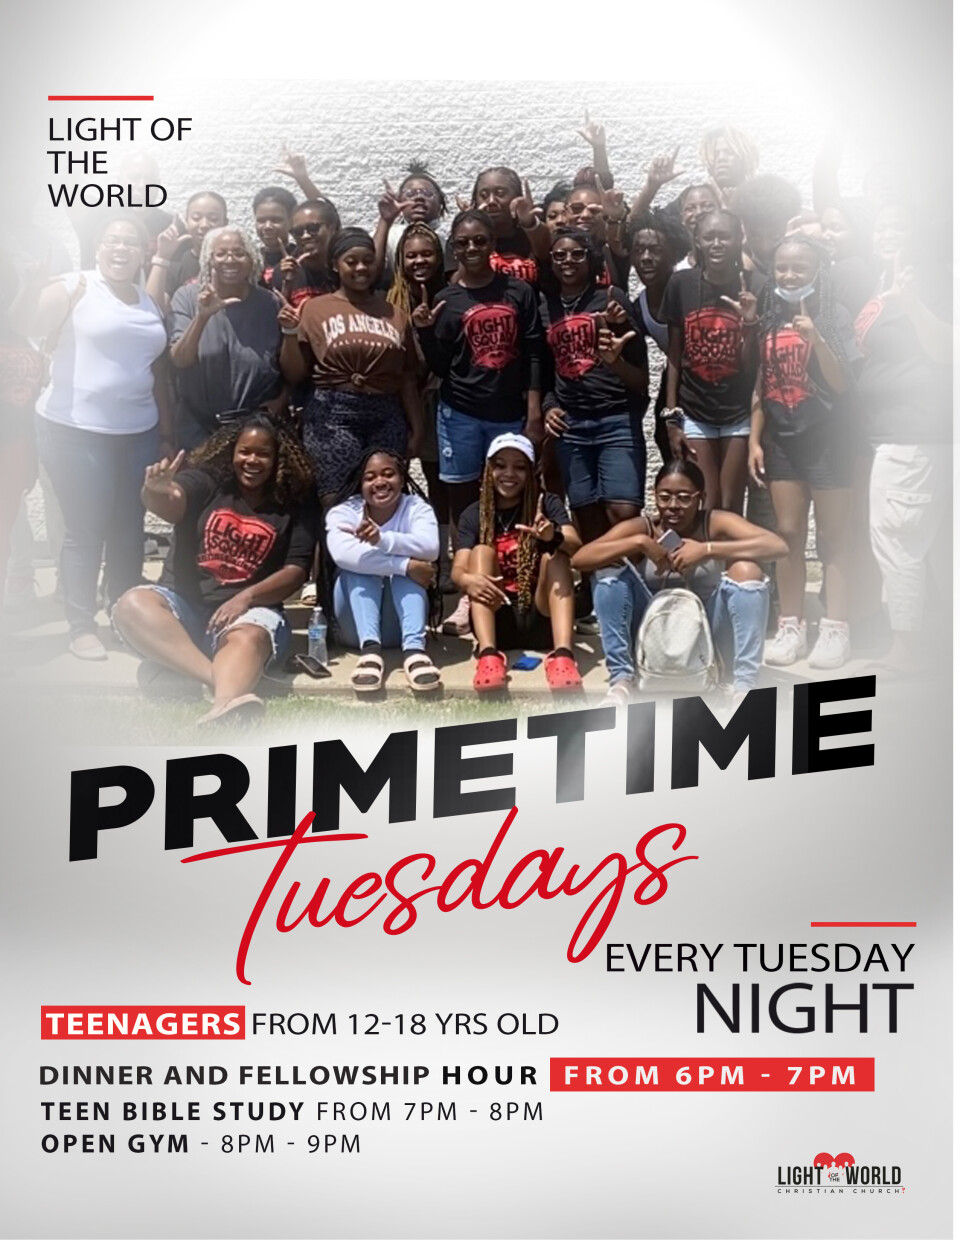 Primetime Tuesday Nights